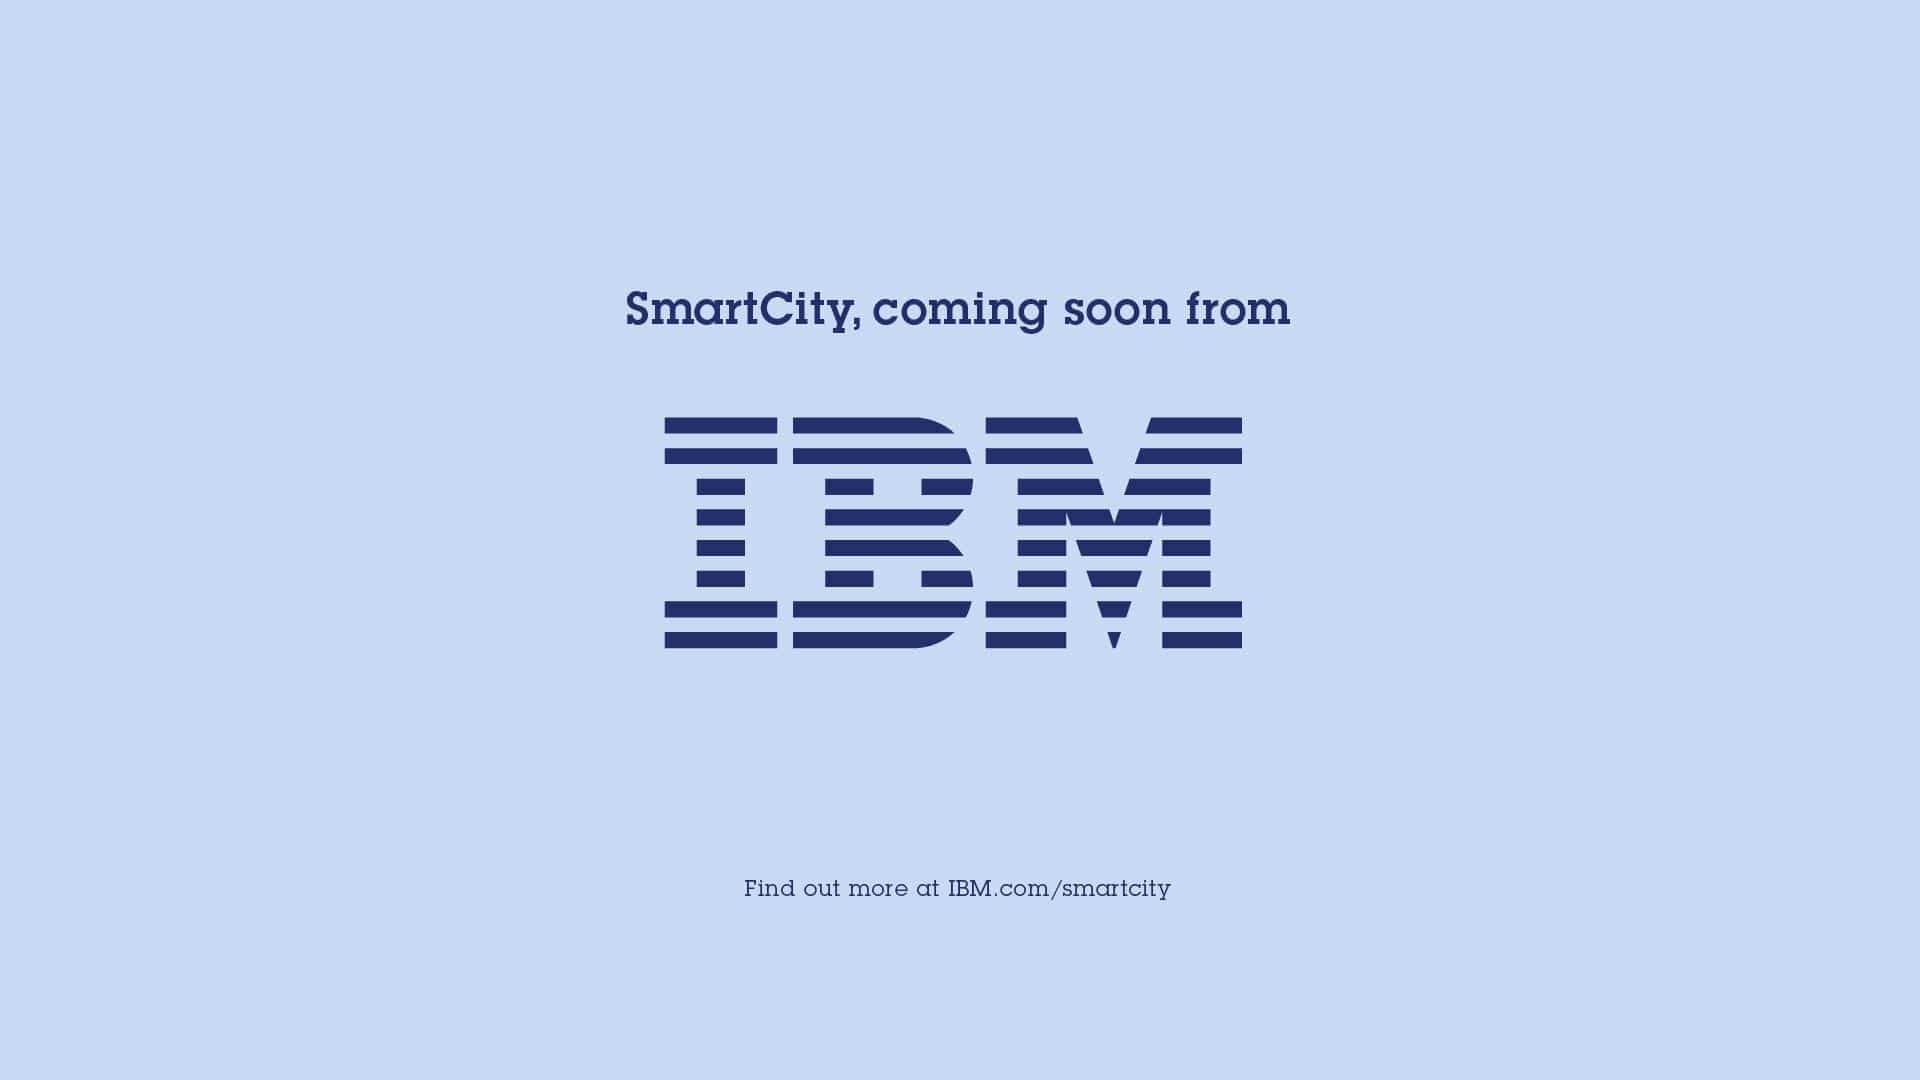 IBM Smart City